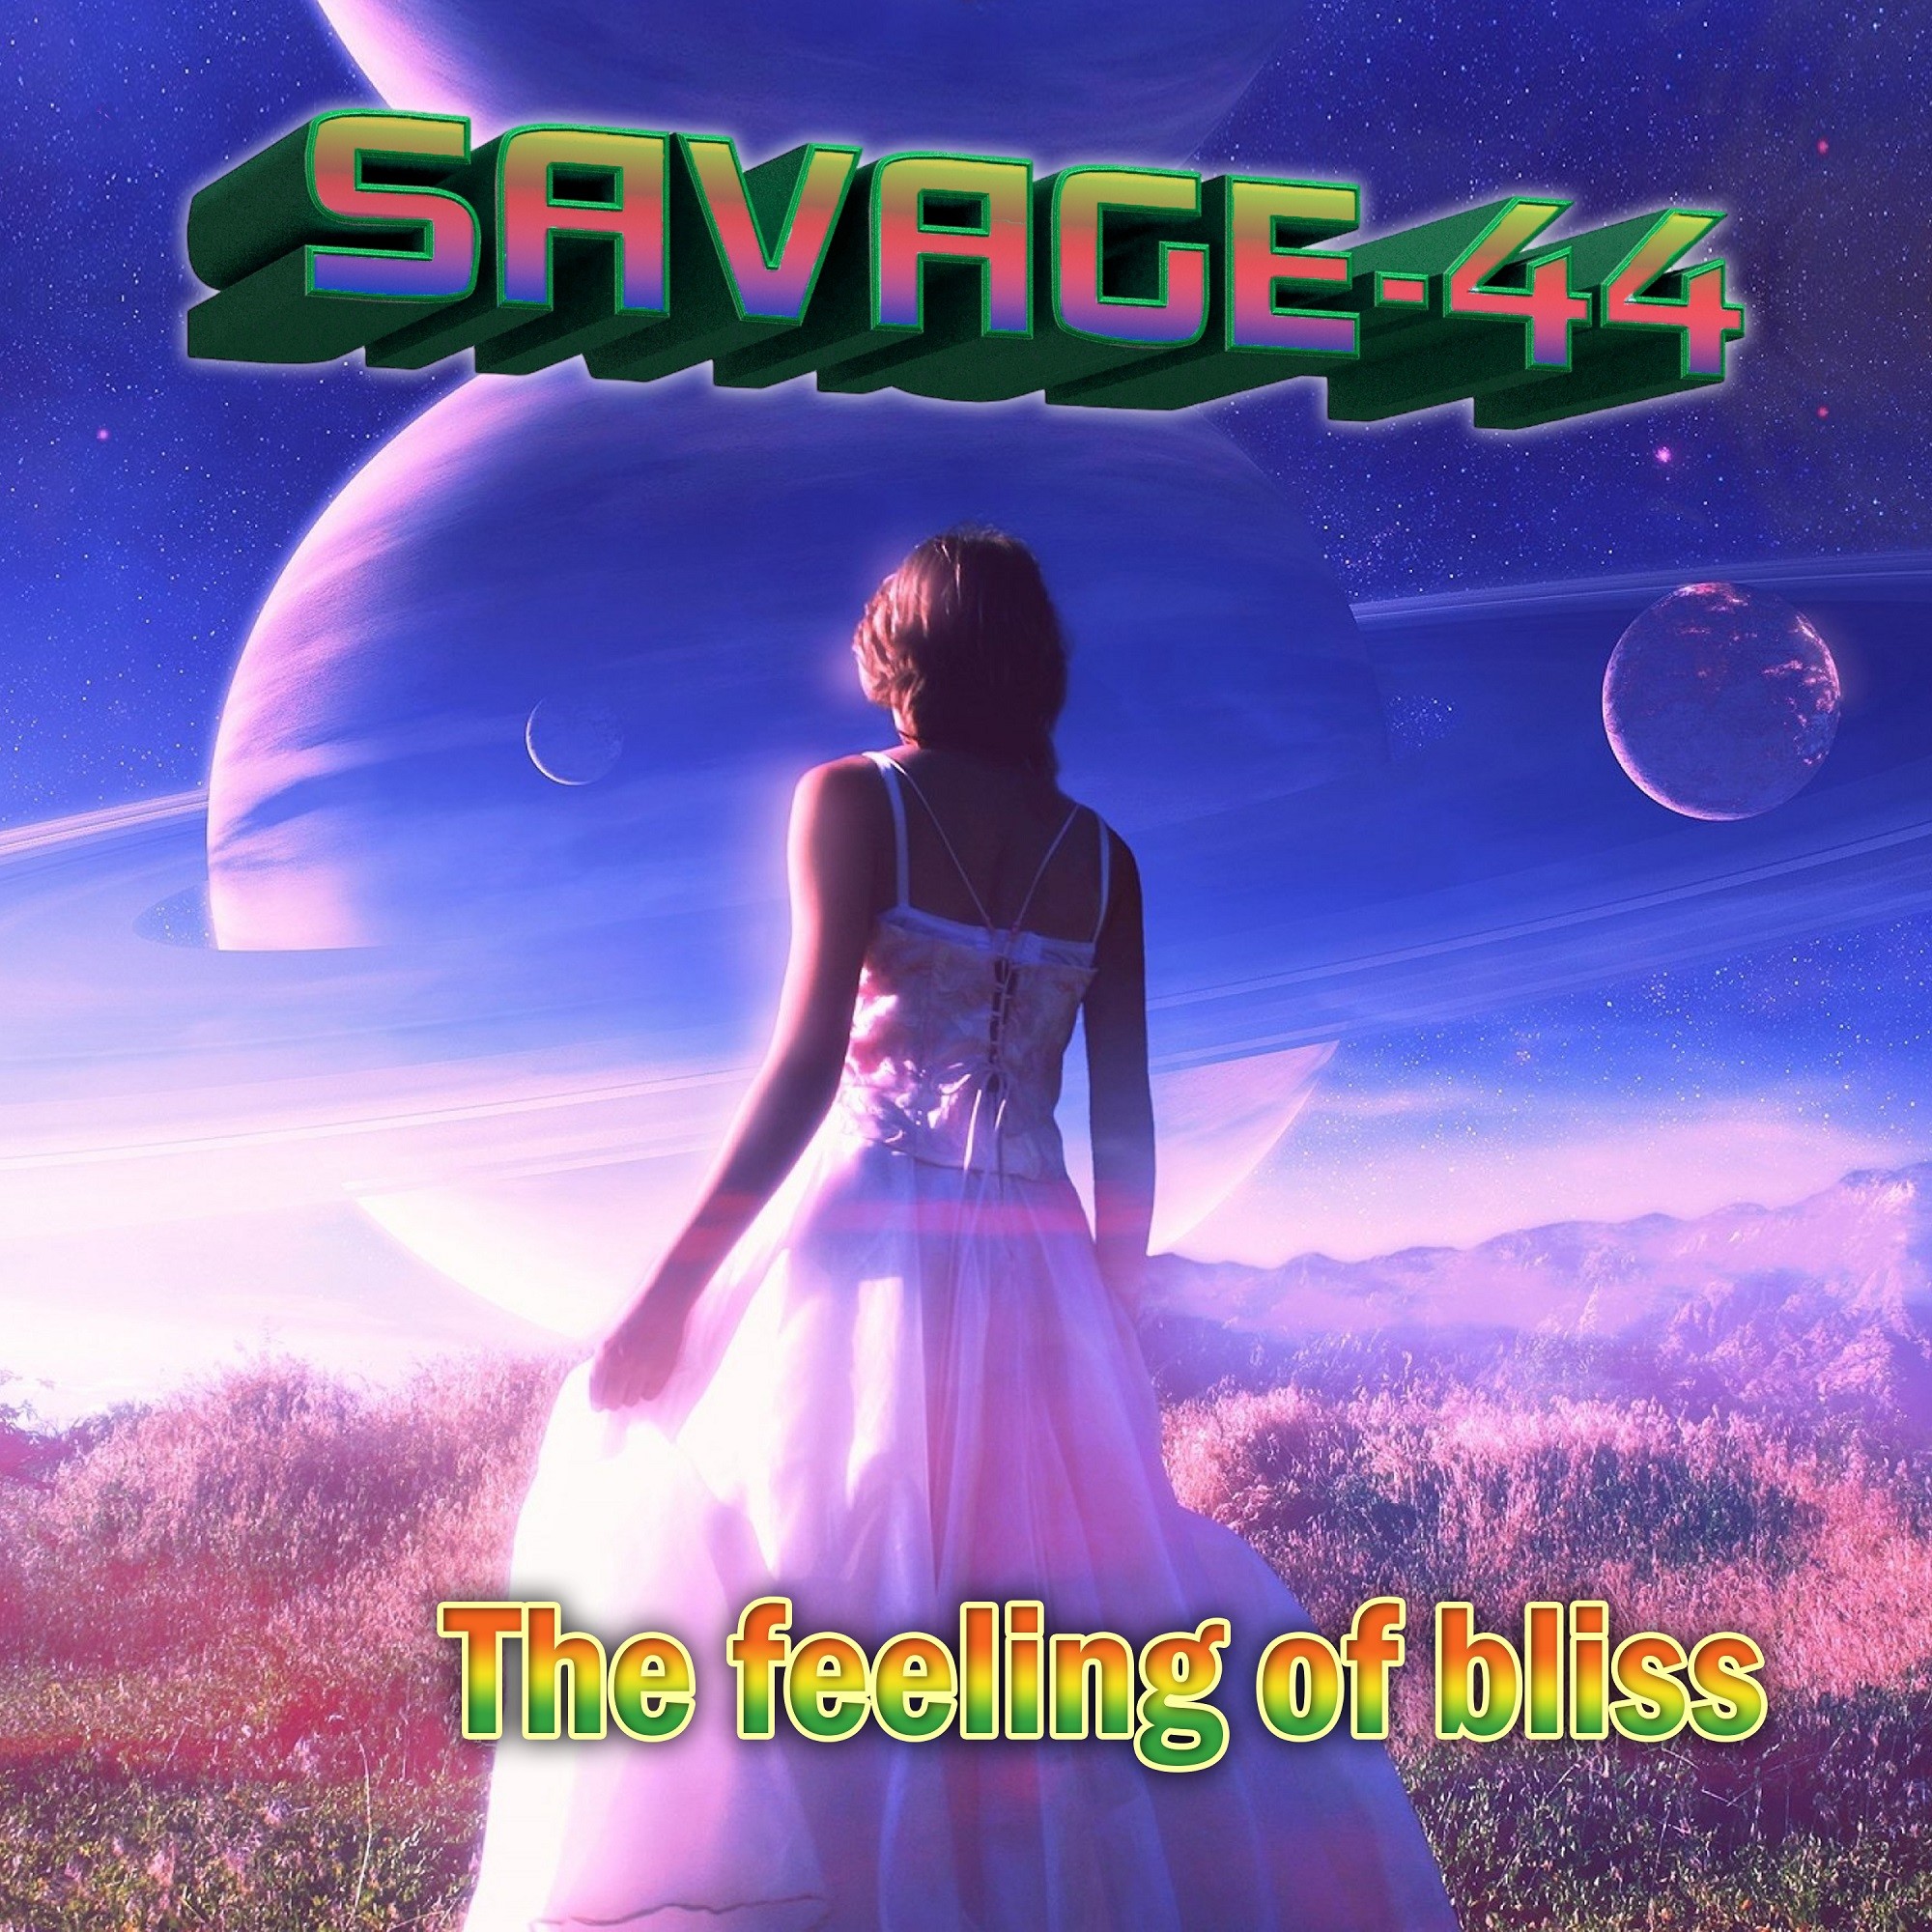 Savage 44. Savage 44 dance party